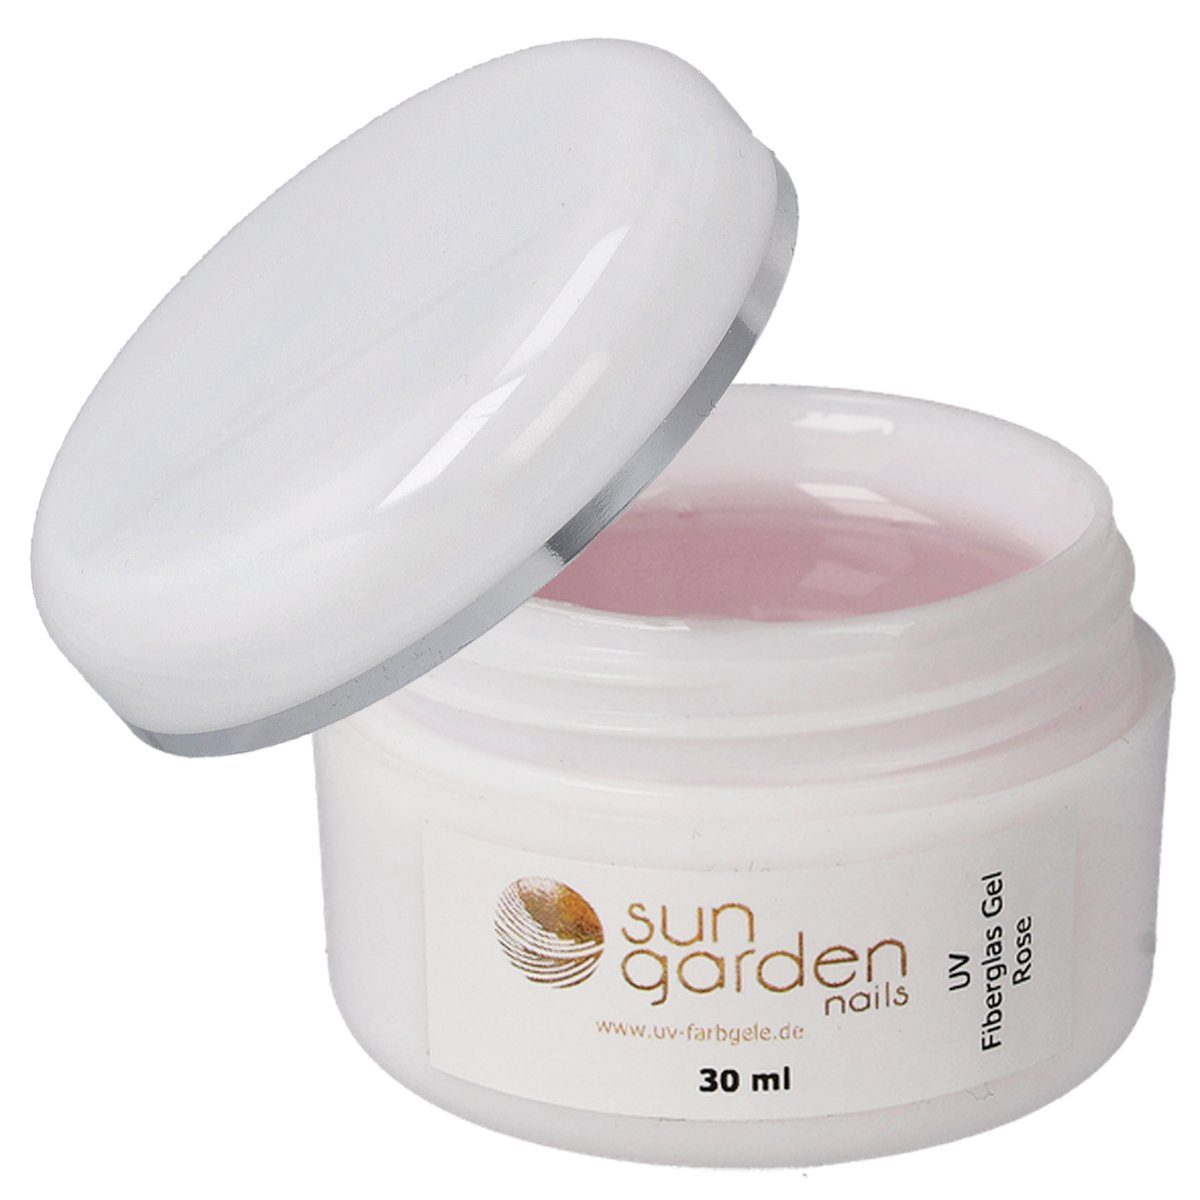 Sun Gel Rosé-Klar Nails 2 30 Garden ml Nagellack Fiberglas UV x